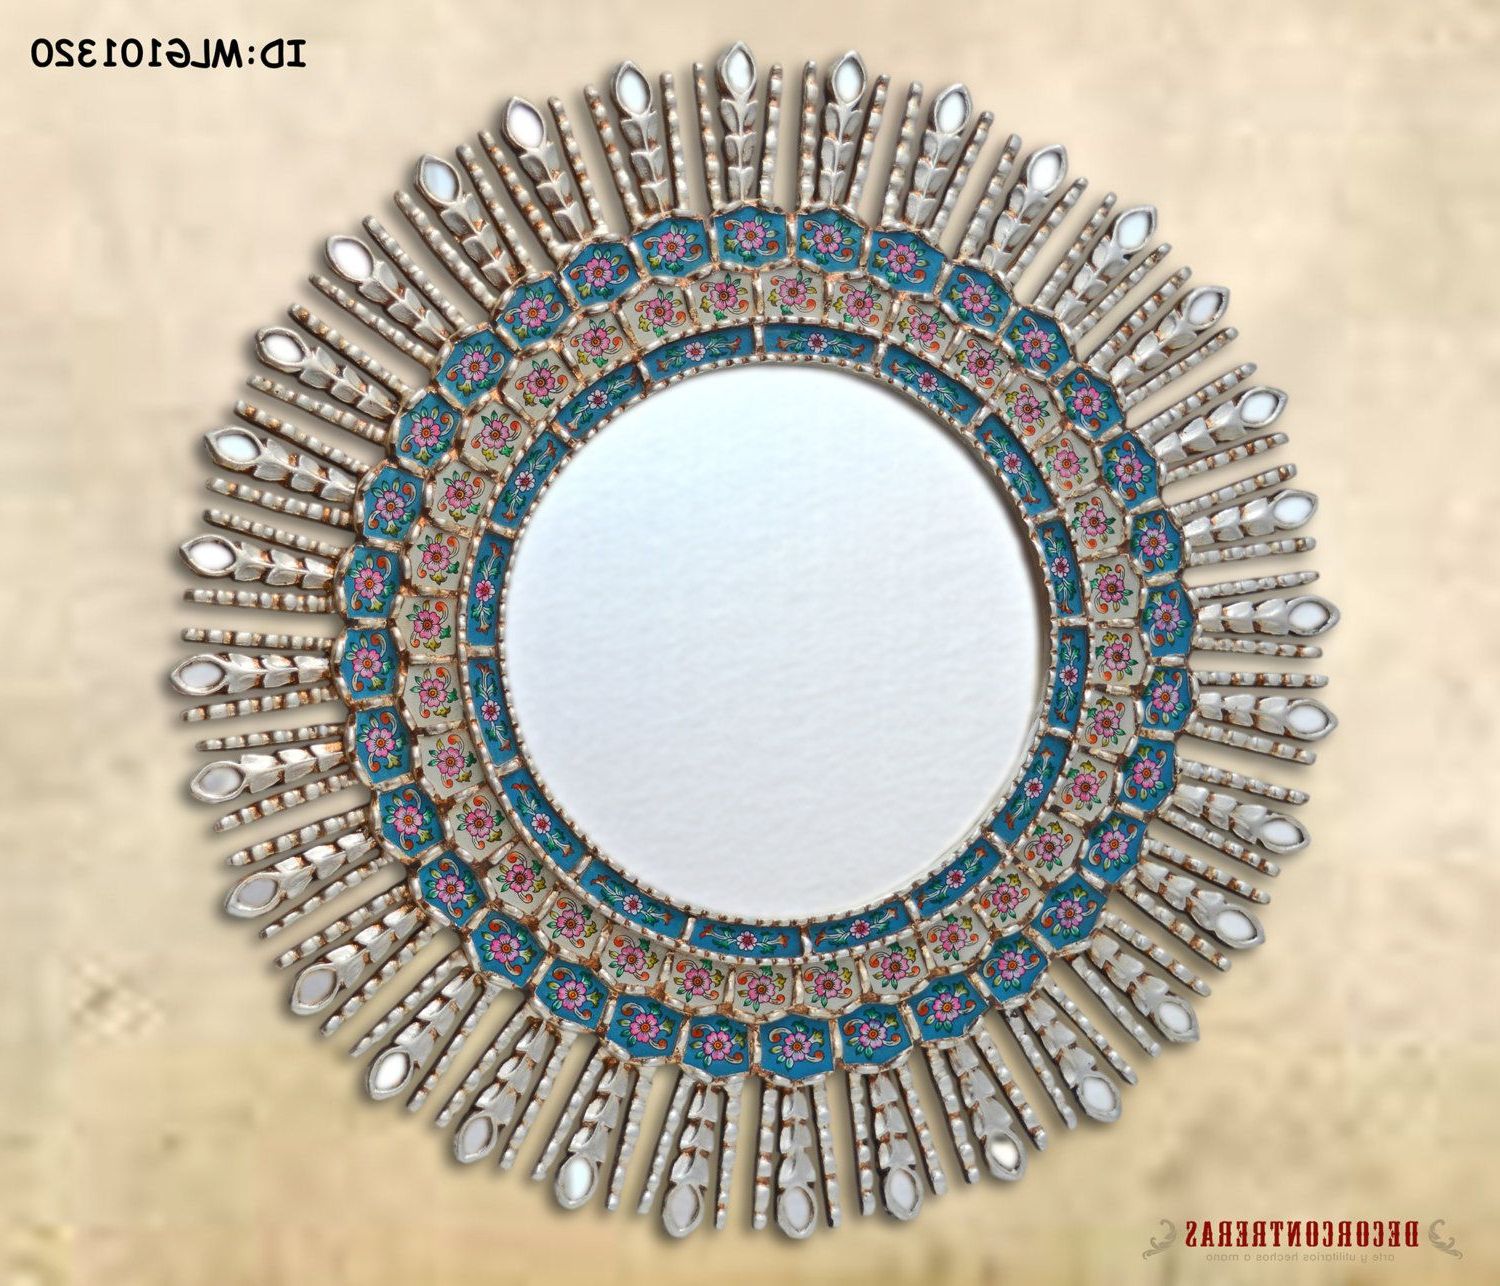 Decorative Silver Round Mirror 30inch, 'mistical Sunburst'  Wall Mirror With Popular Leaf Post Sunburst Round Wall Mirrors (View 11 of 15)